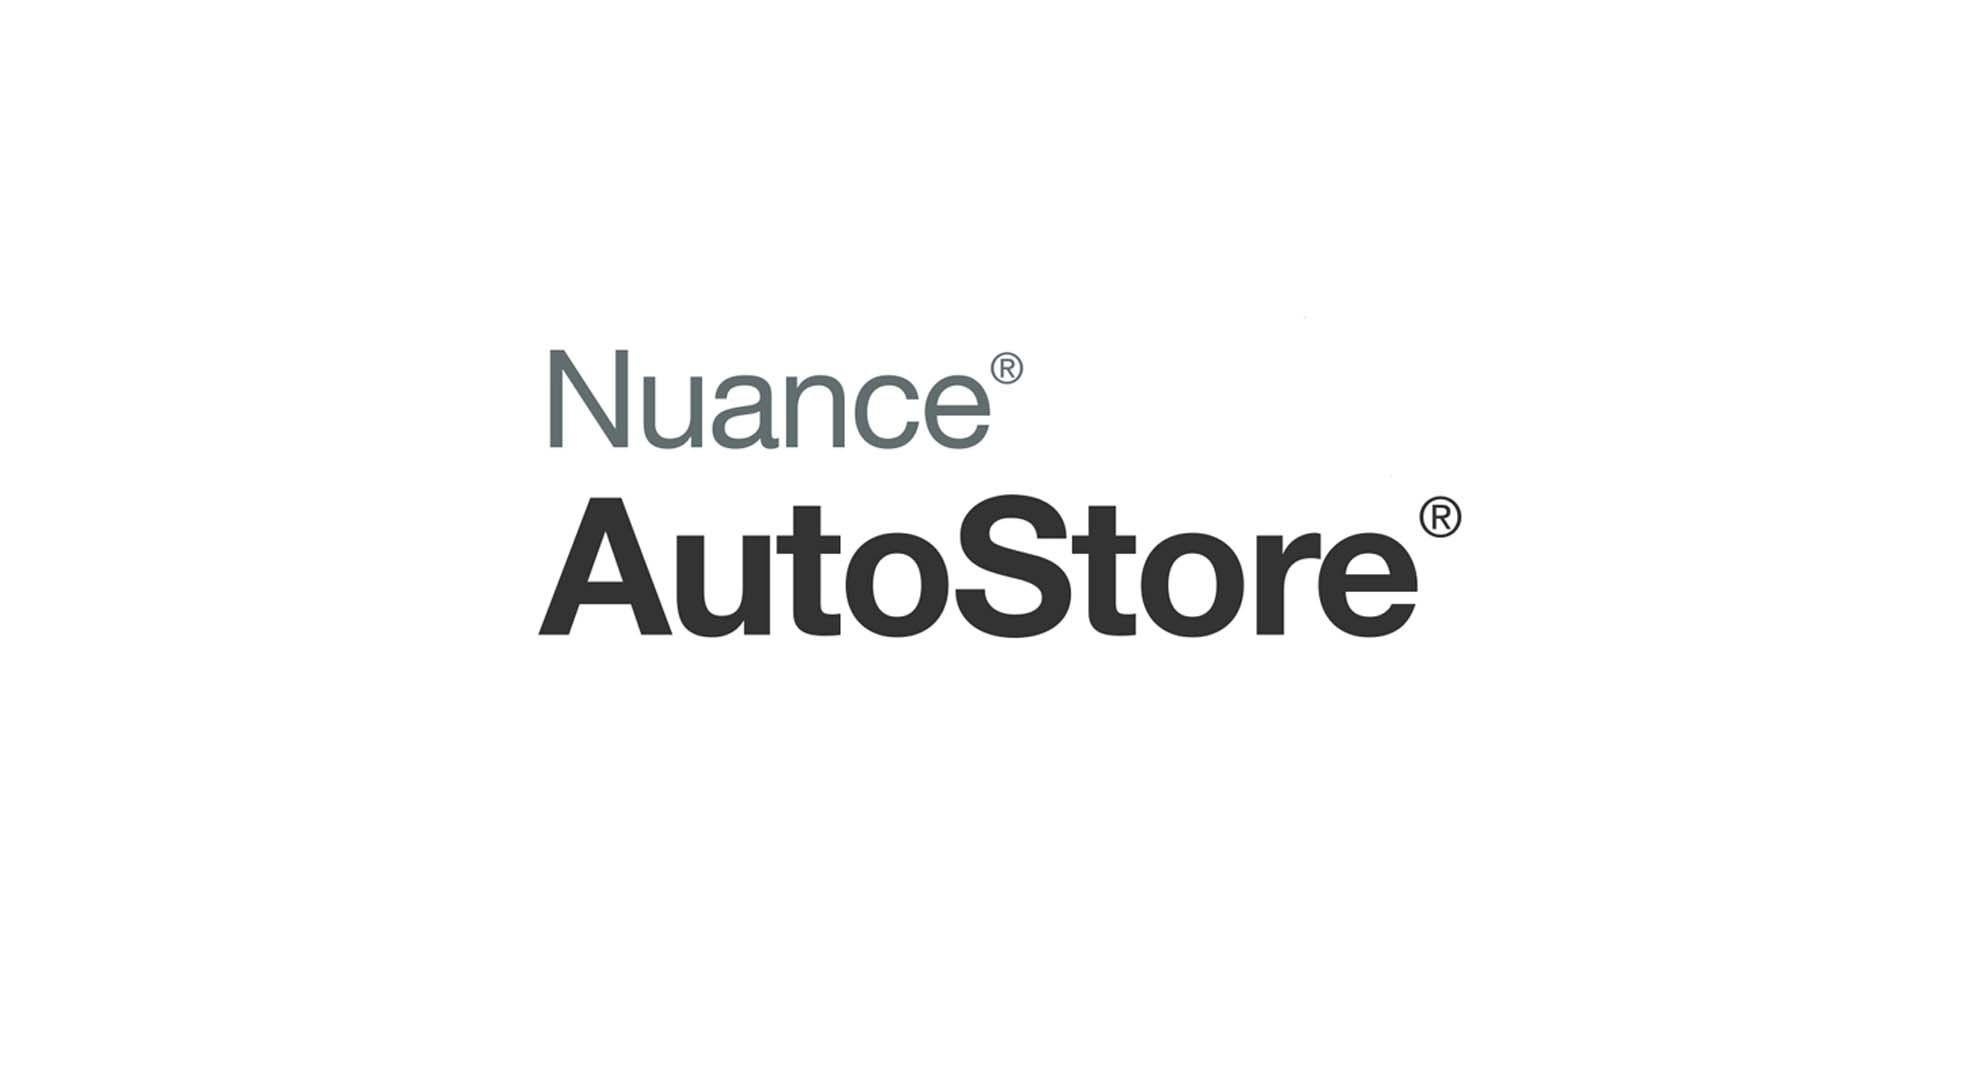 AutoStore Logo - Nuance Autostore Logo 1920px - Evolution Technology Group